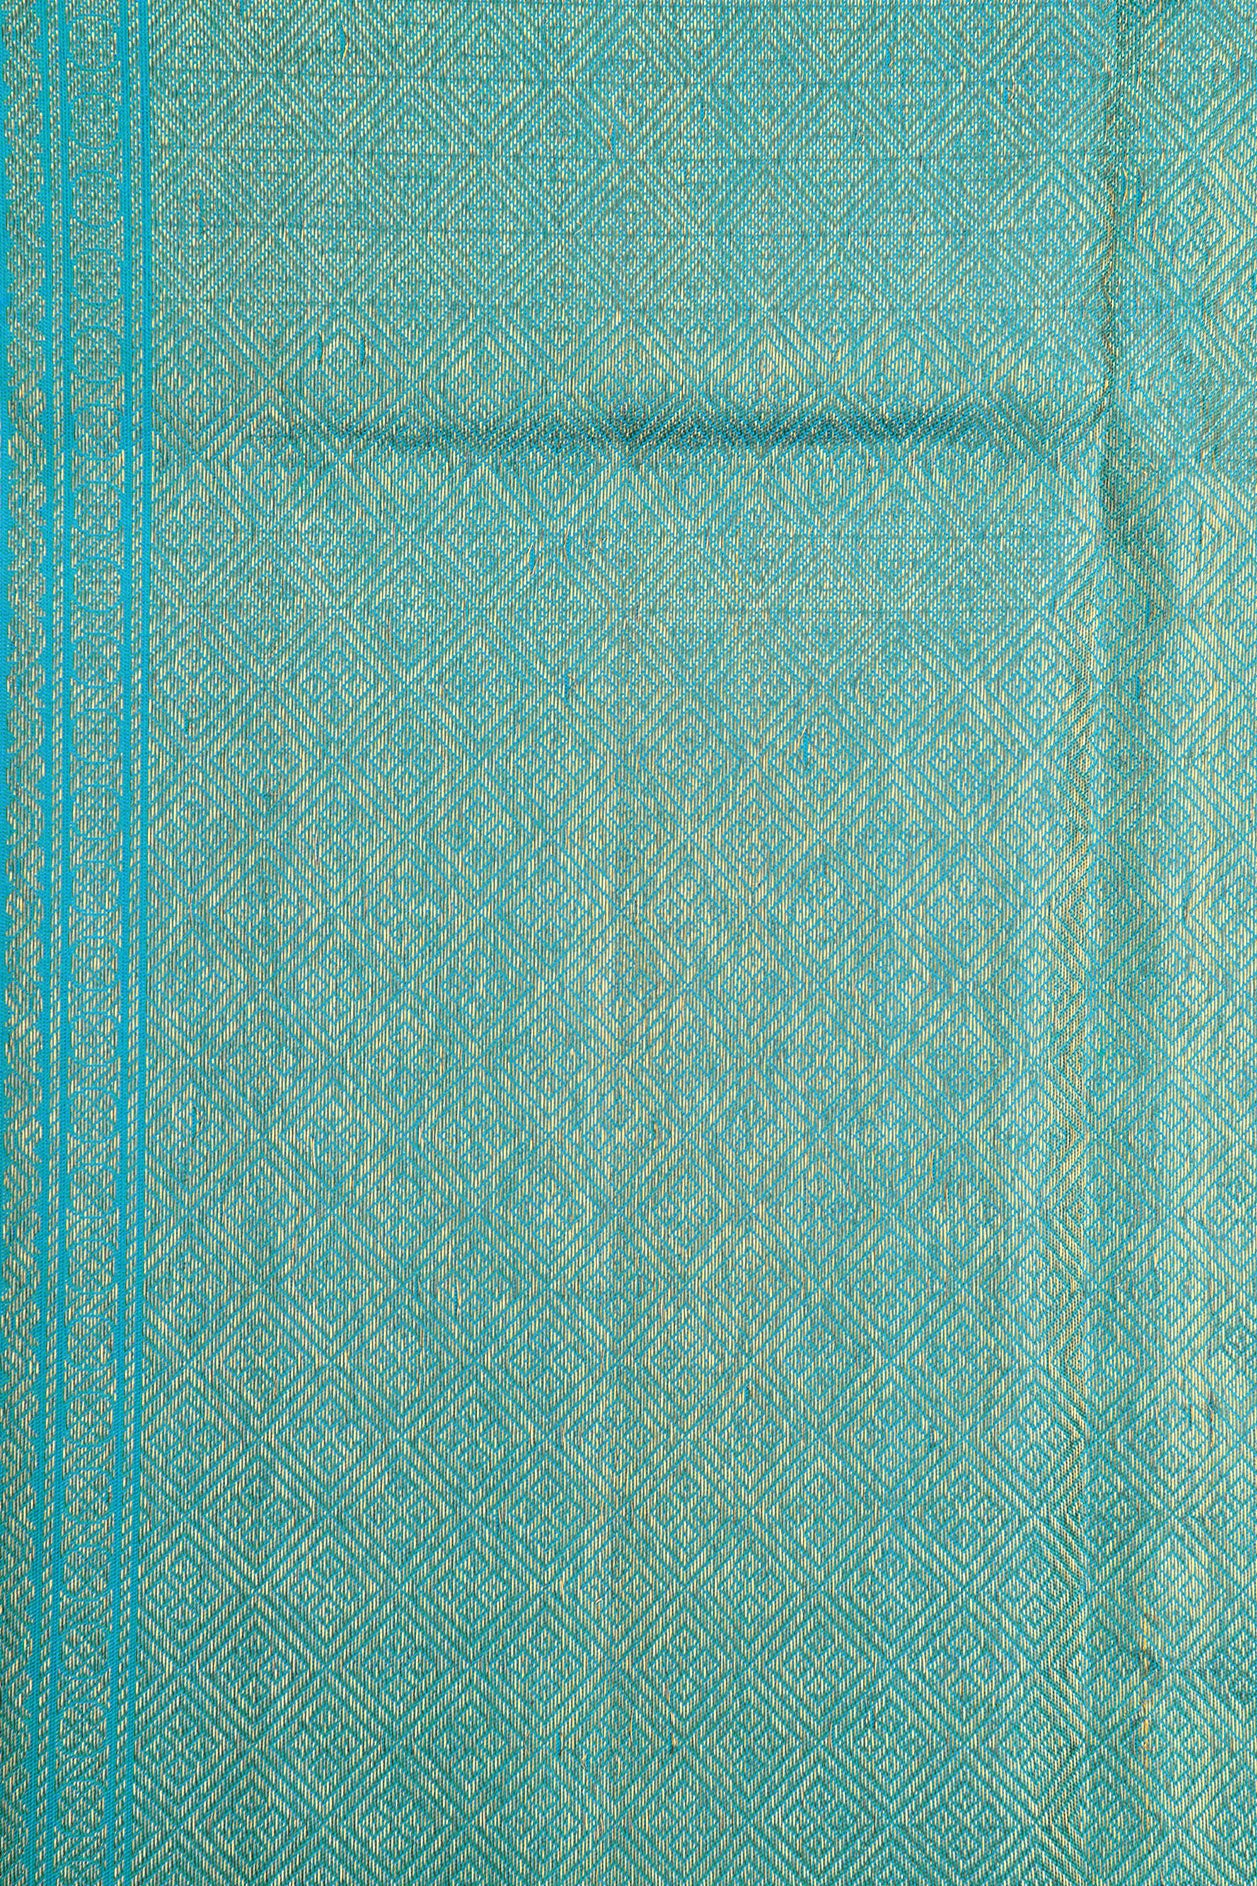 Thread Work With Turquoise Blue Kanchipuram Silk Saree